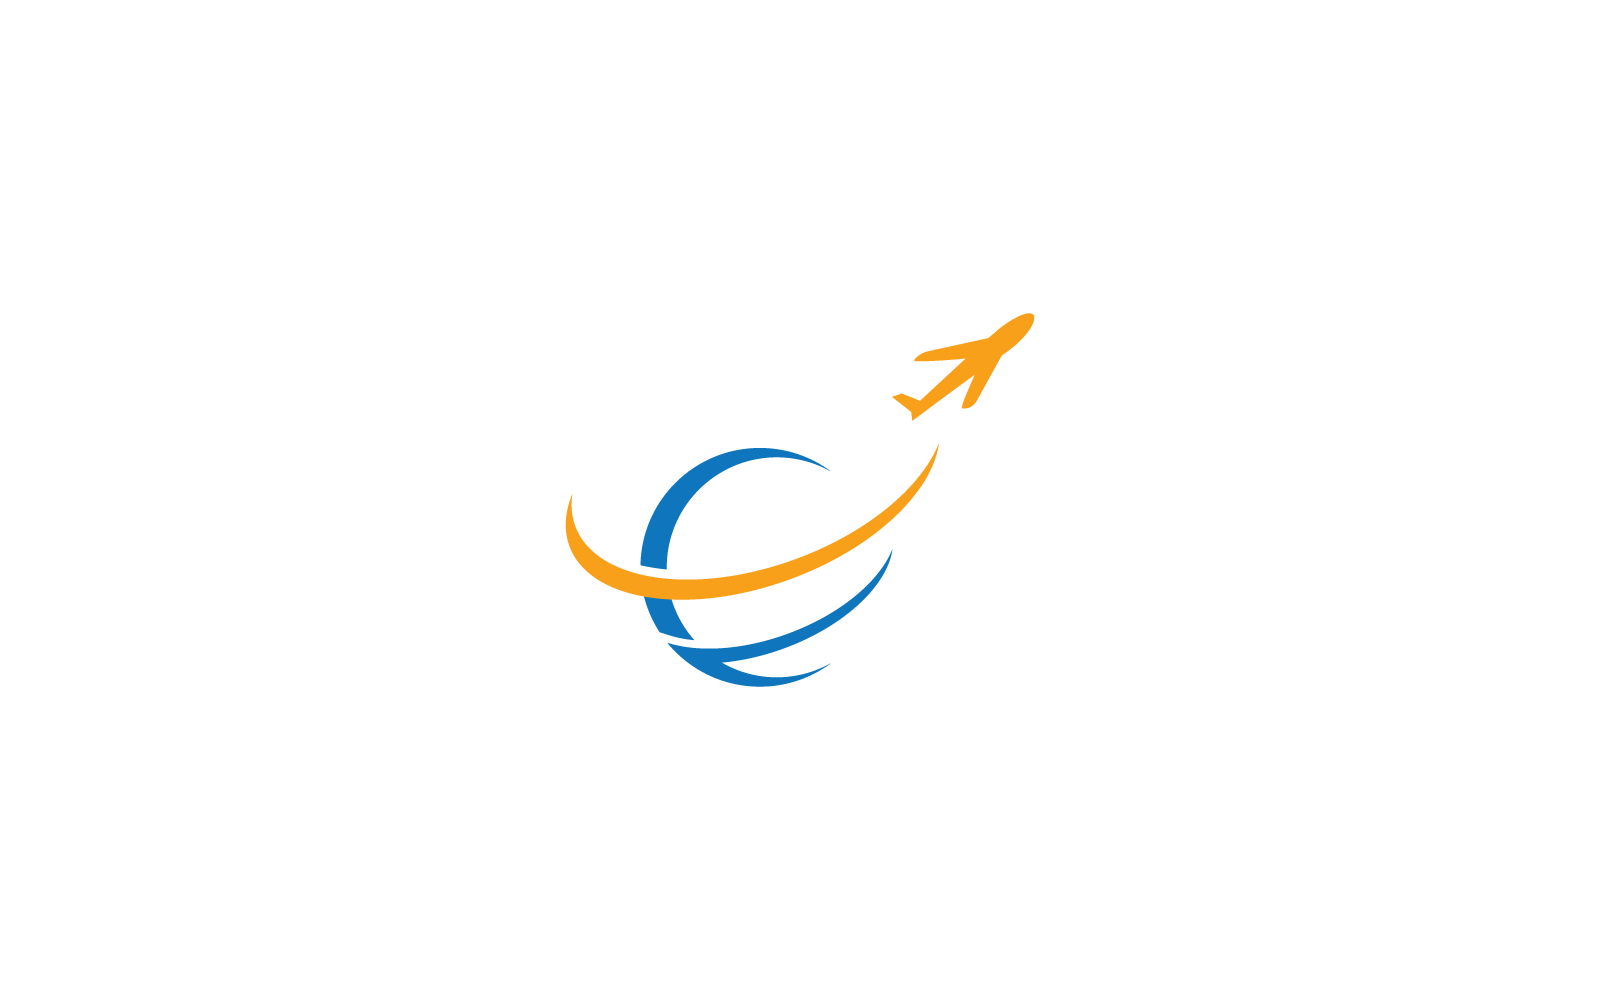 Plane Travel logo illustration flat design